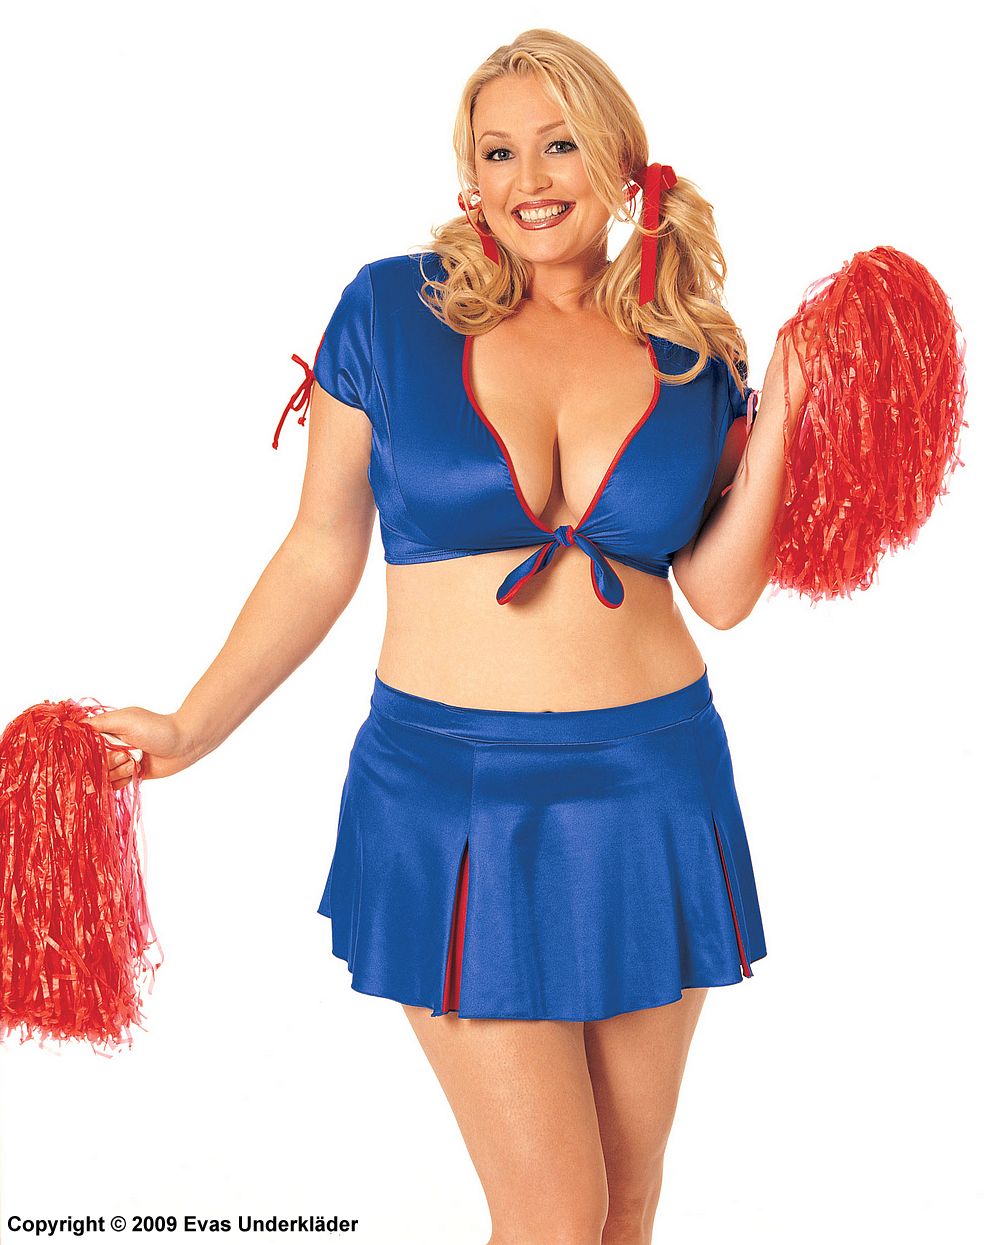 Cheerleader costume, plus size